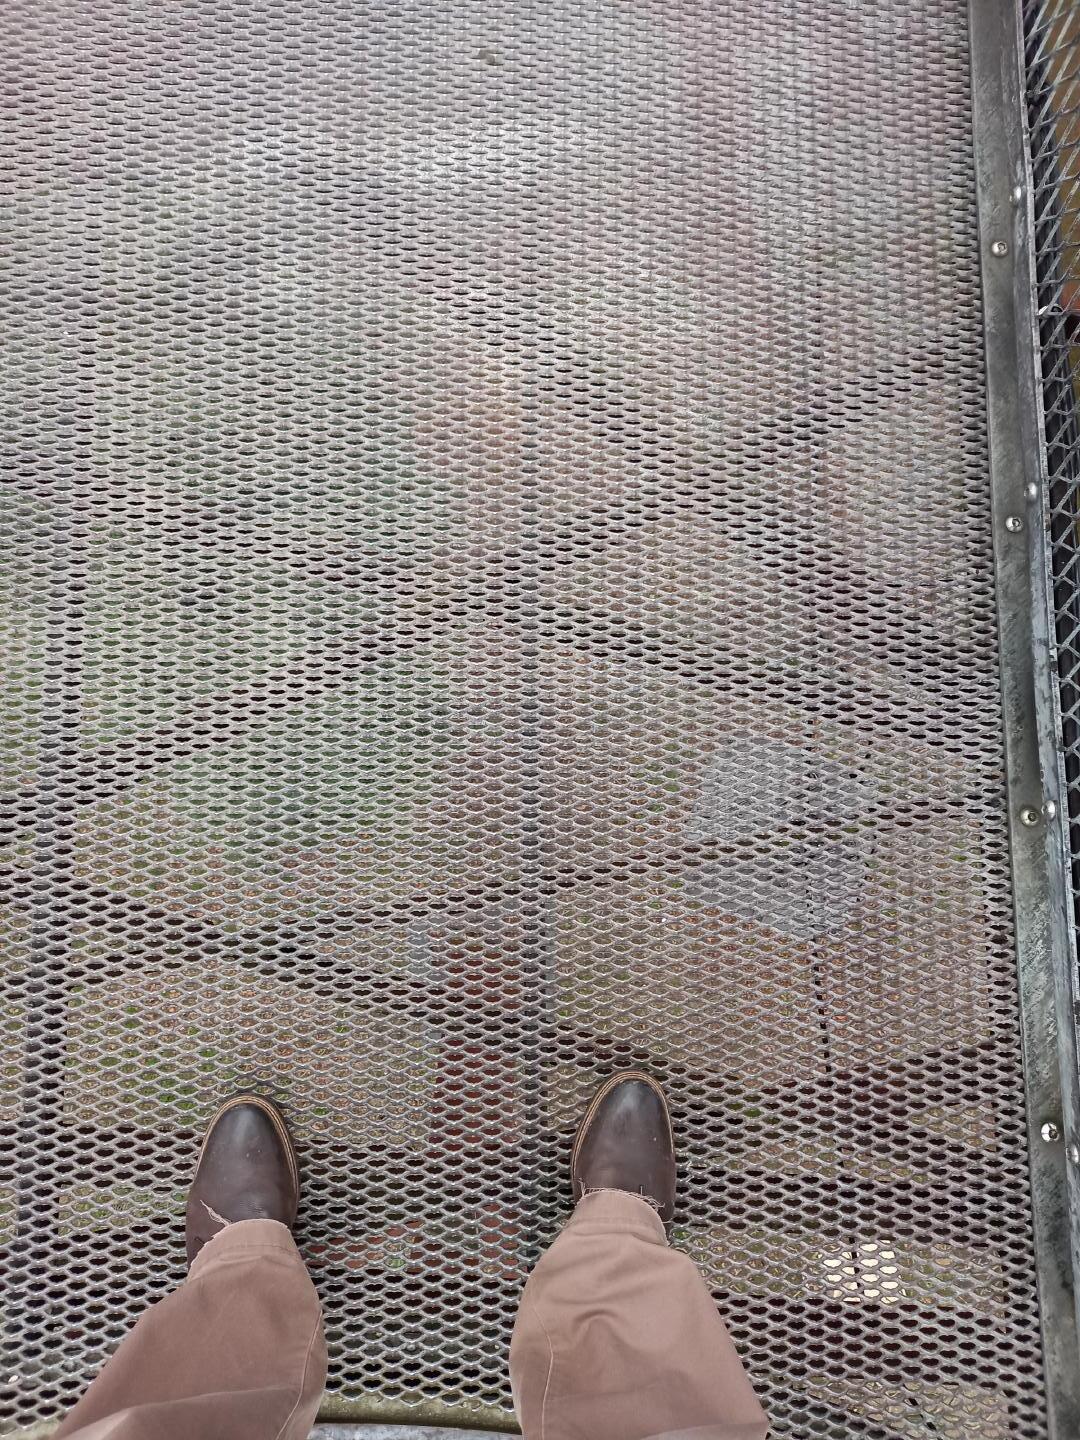 Looking down at the mesh walkway